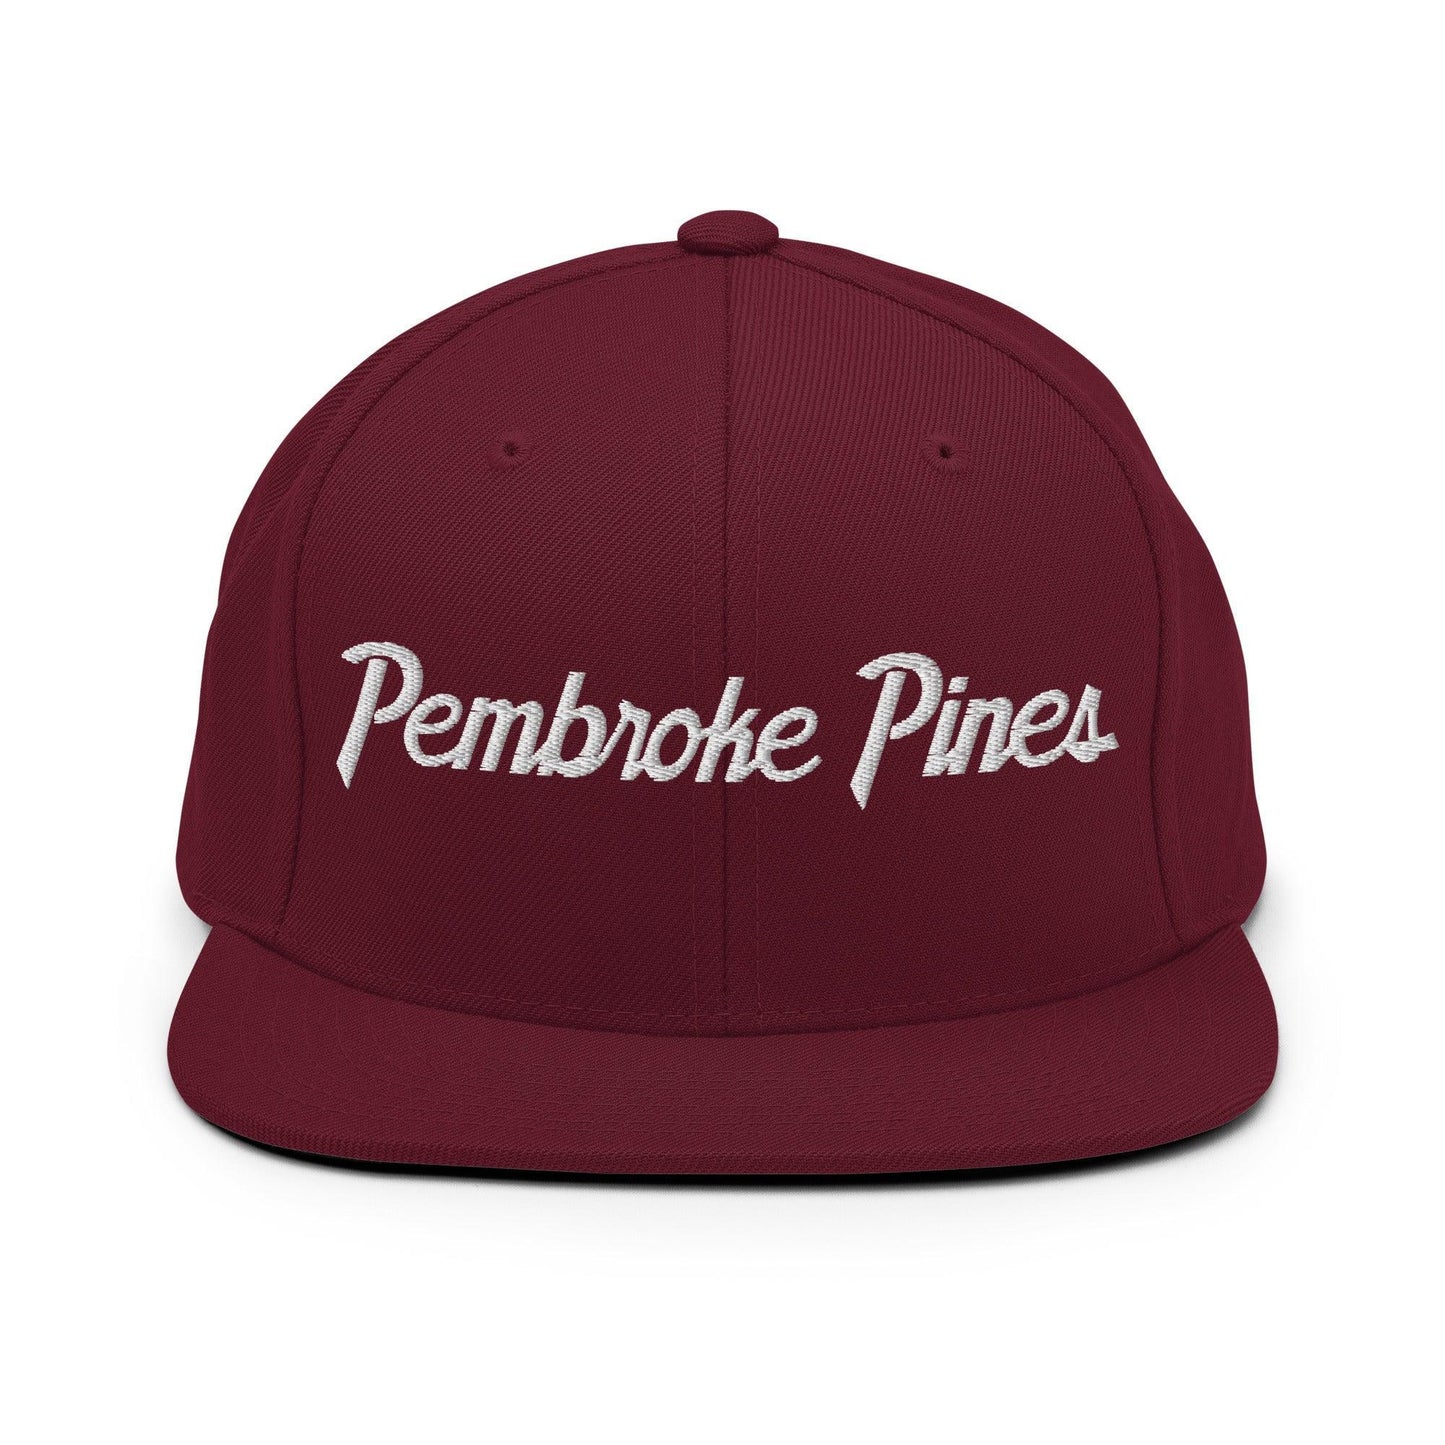 Pembroke Pines Script Snapback Hat Maroon